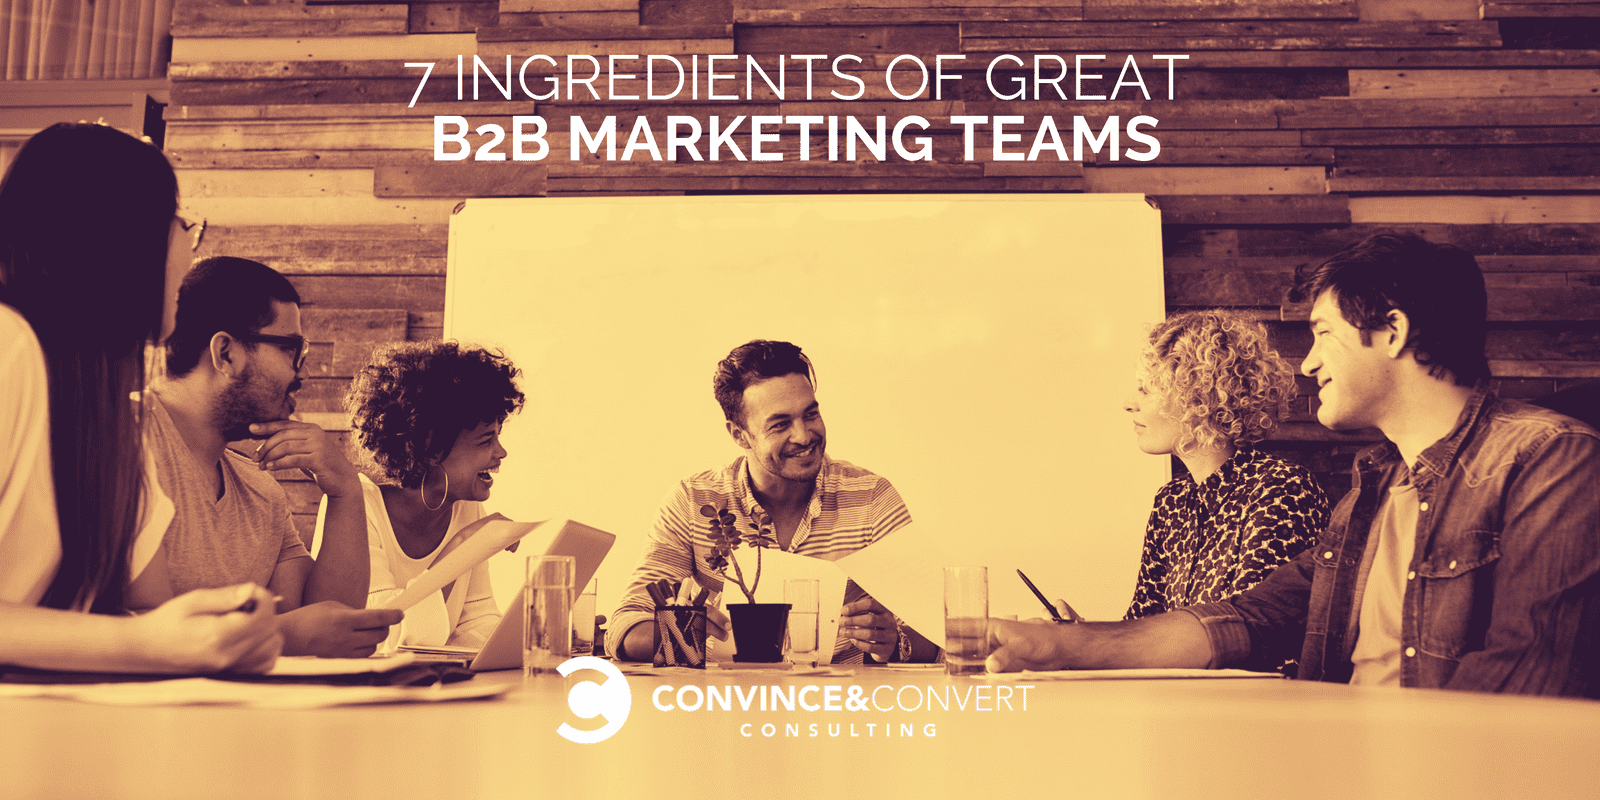 great-b2b-marketing-teams.jpg